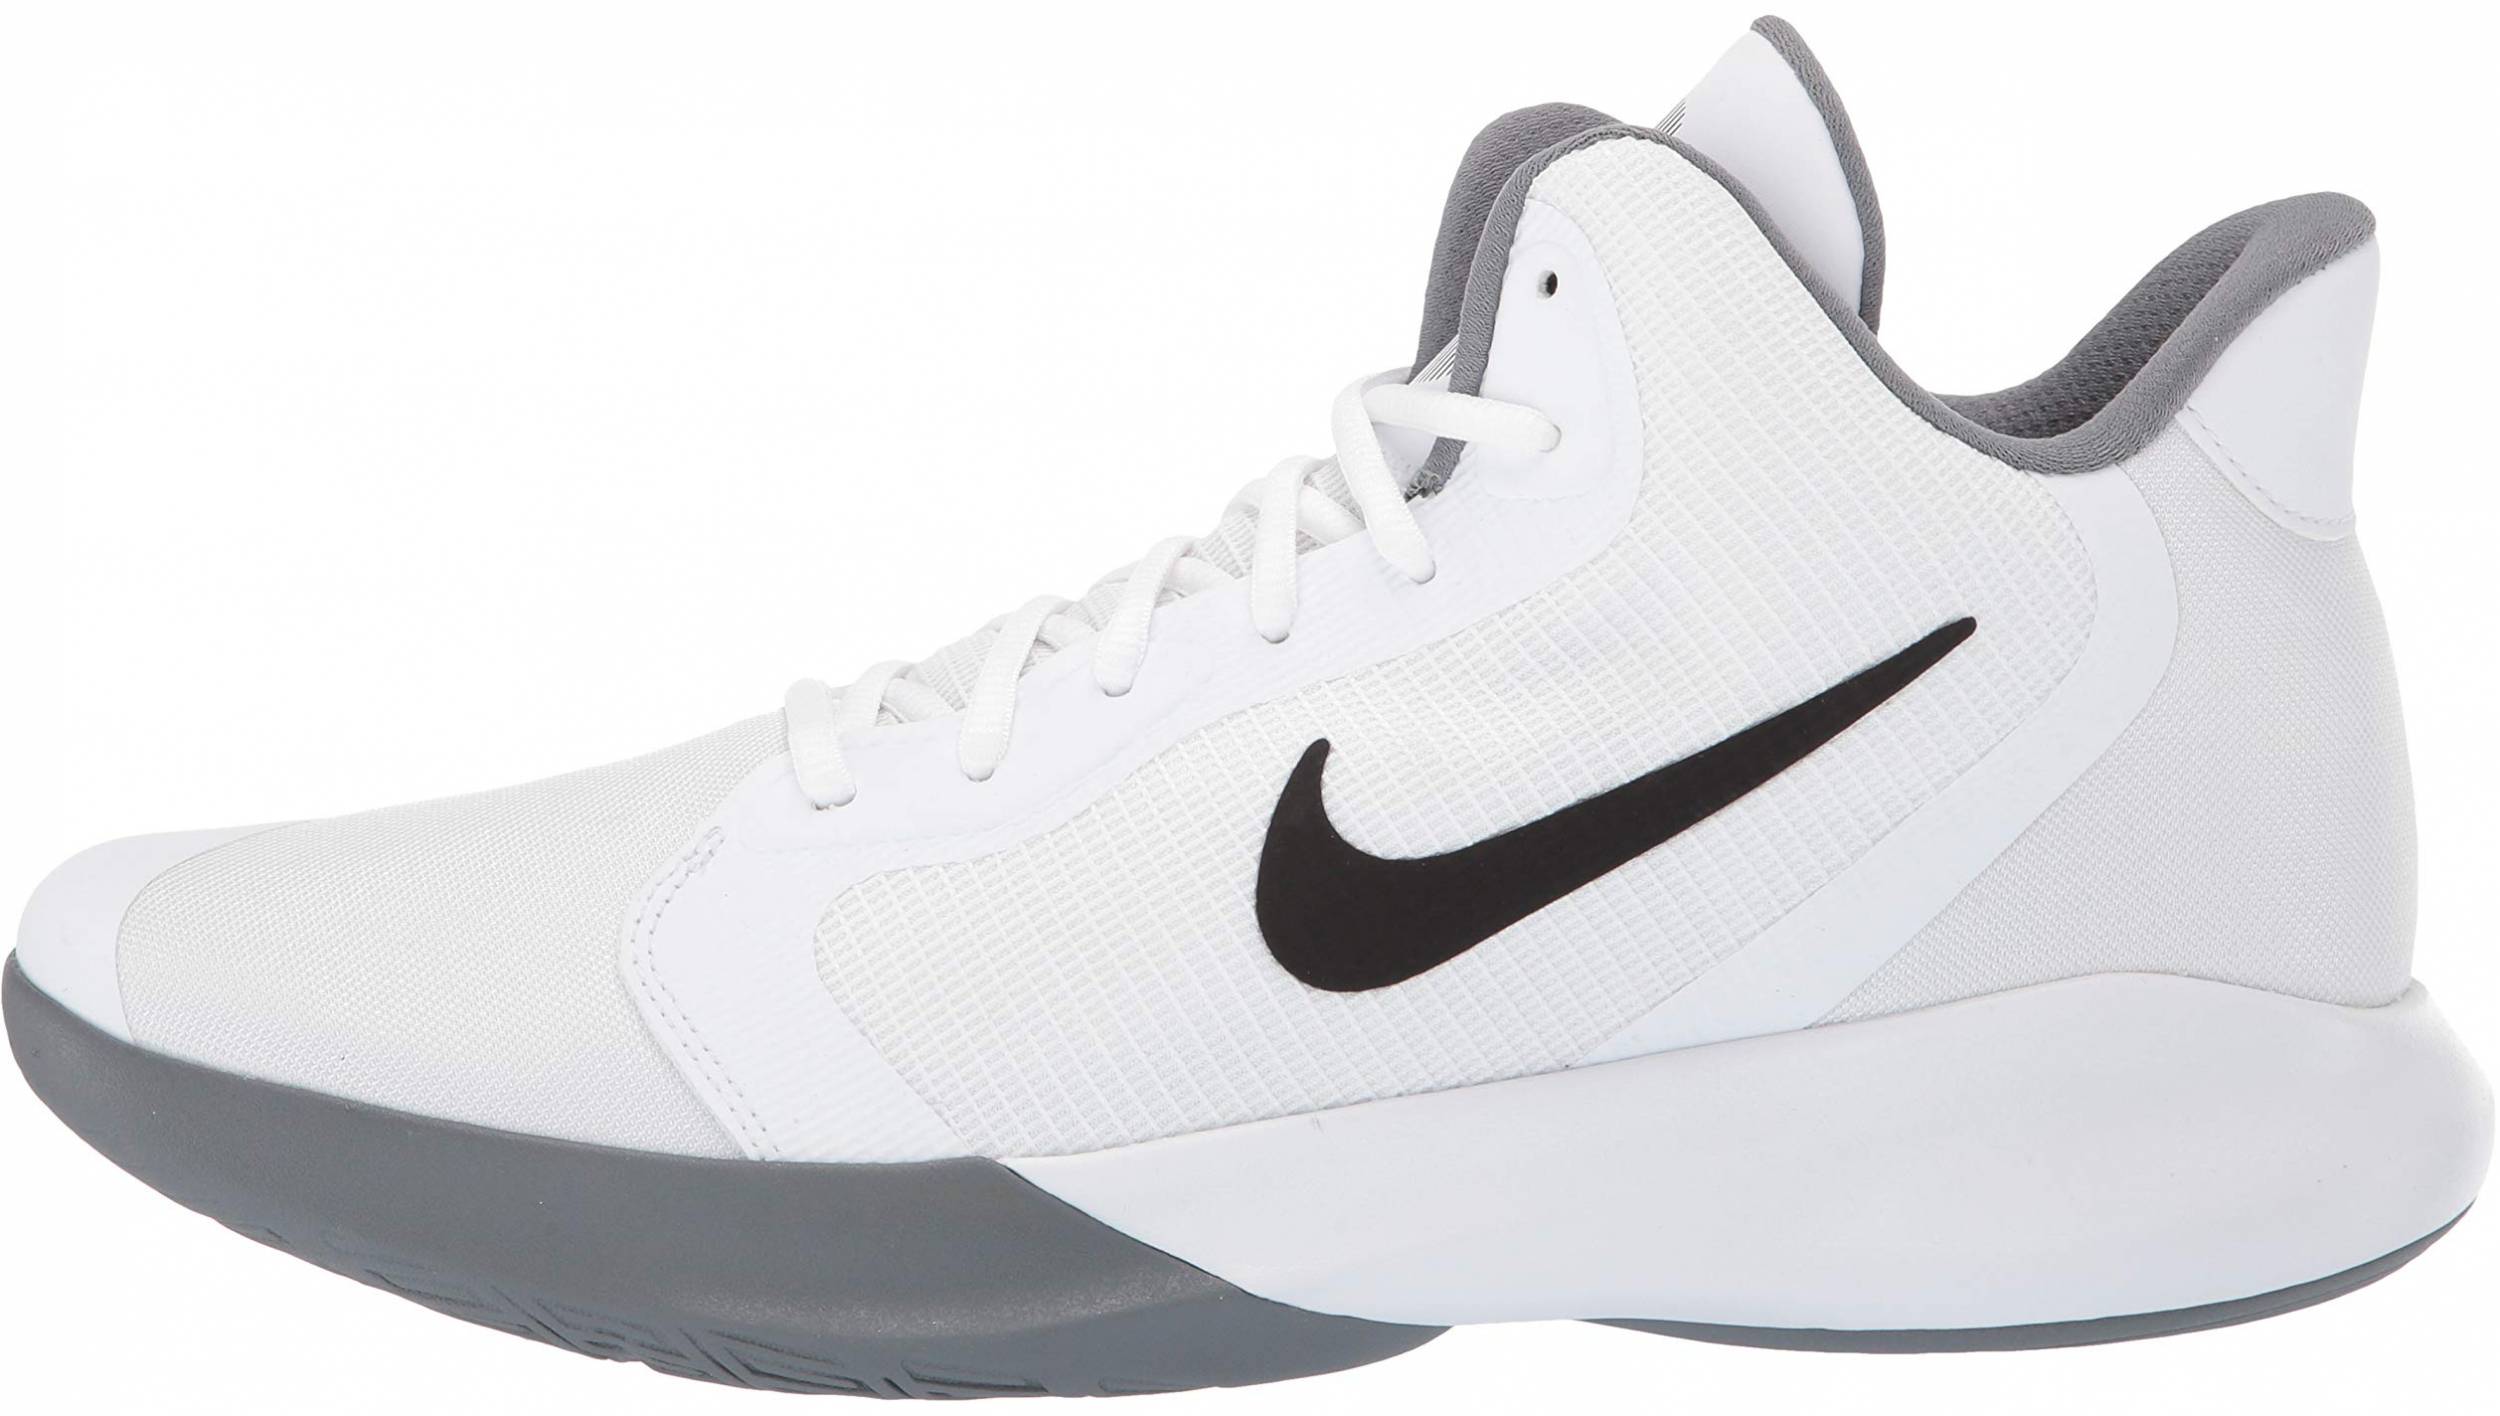 Save 23% on White Nike Basketball Shoes 